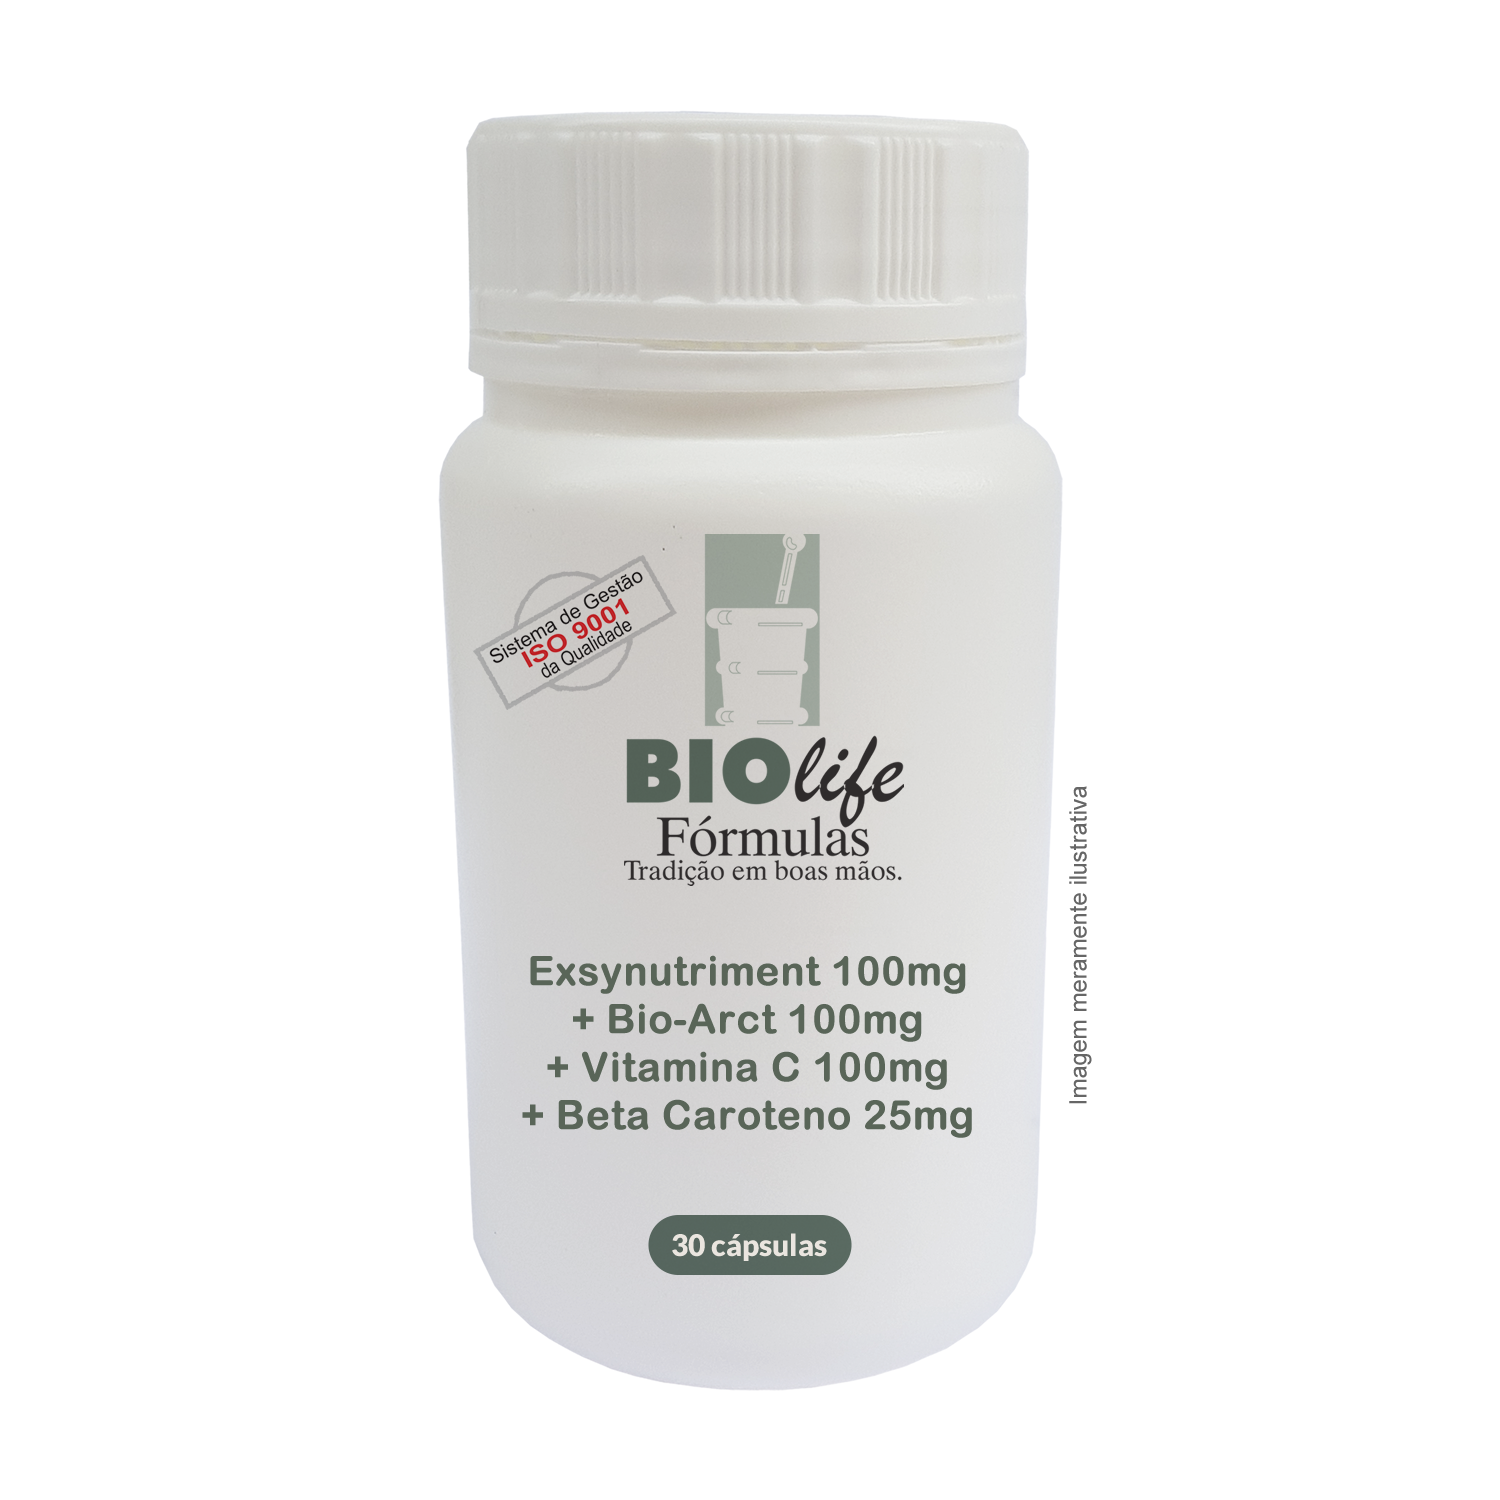 Exsynutriment 100mg + Bio-Arct 100mg + Vitamina C 100mg + Beta Caroteno 25mg com 30 caps - BioLife